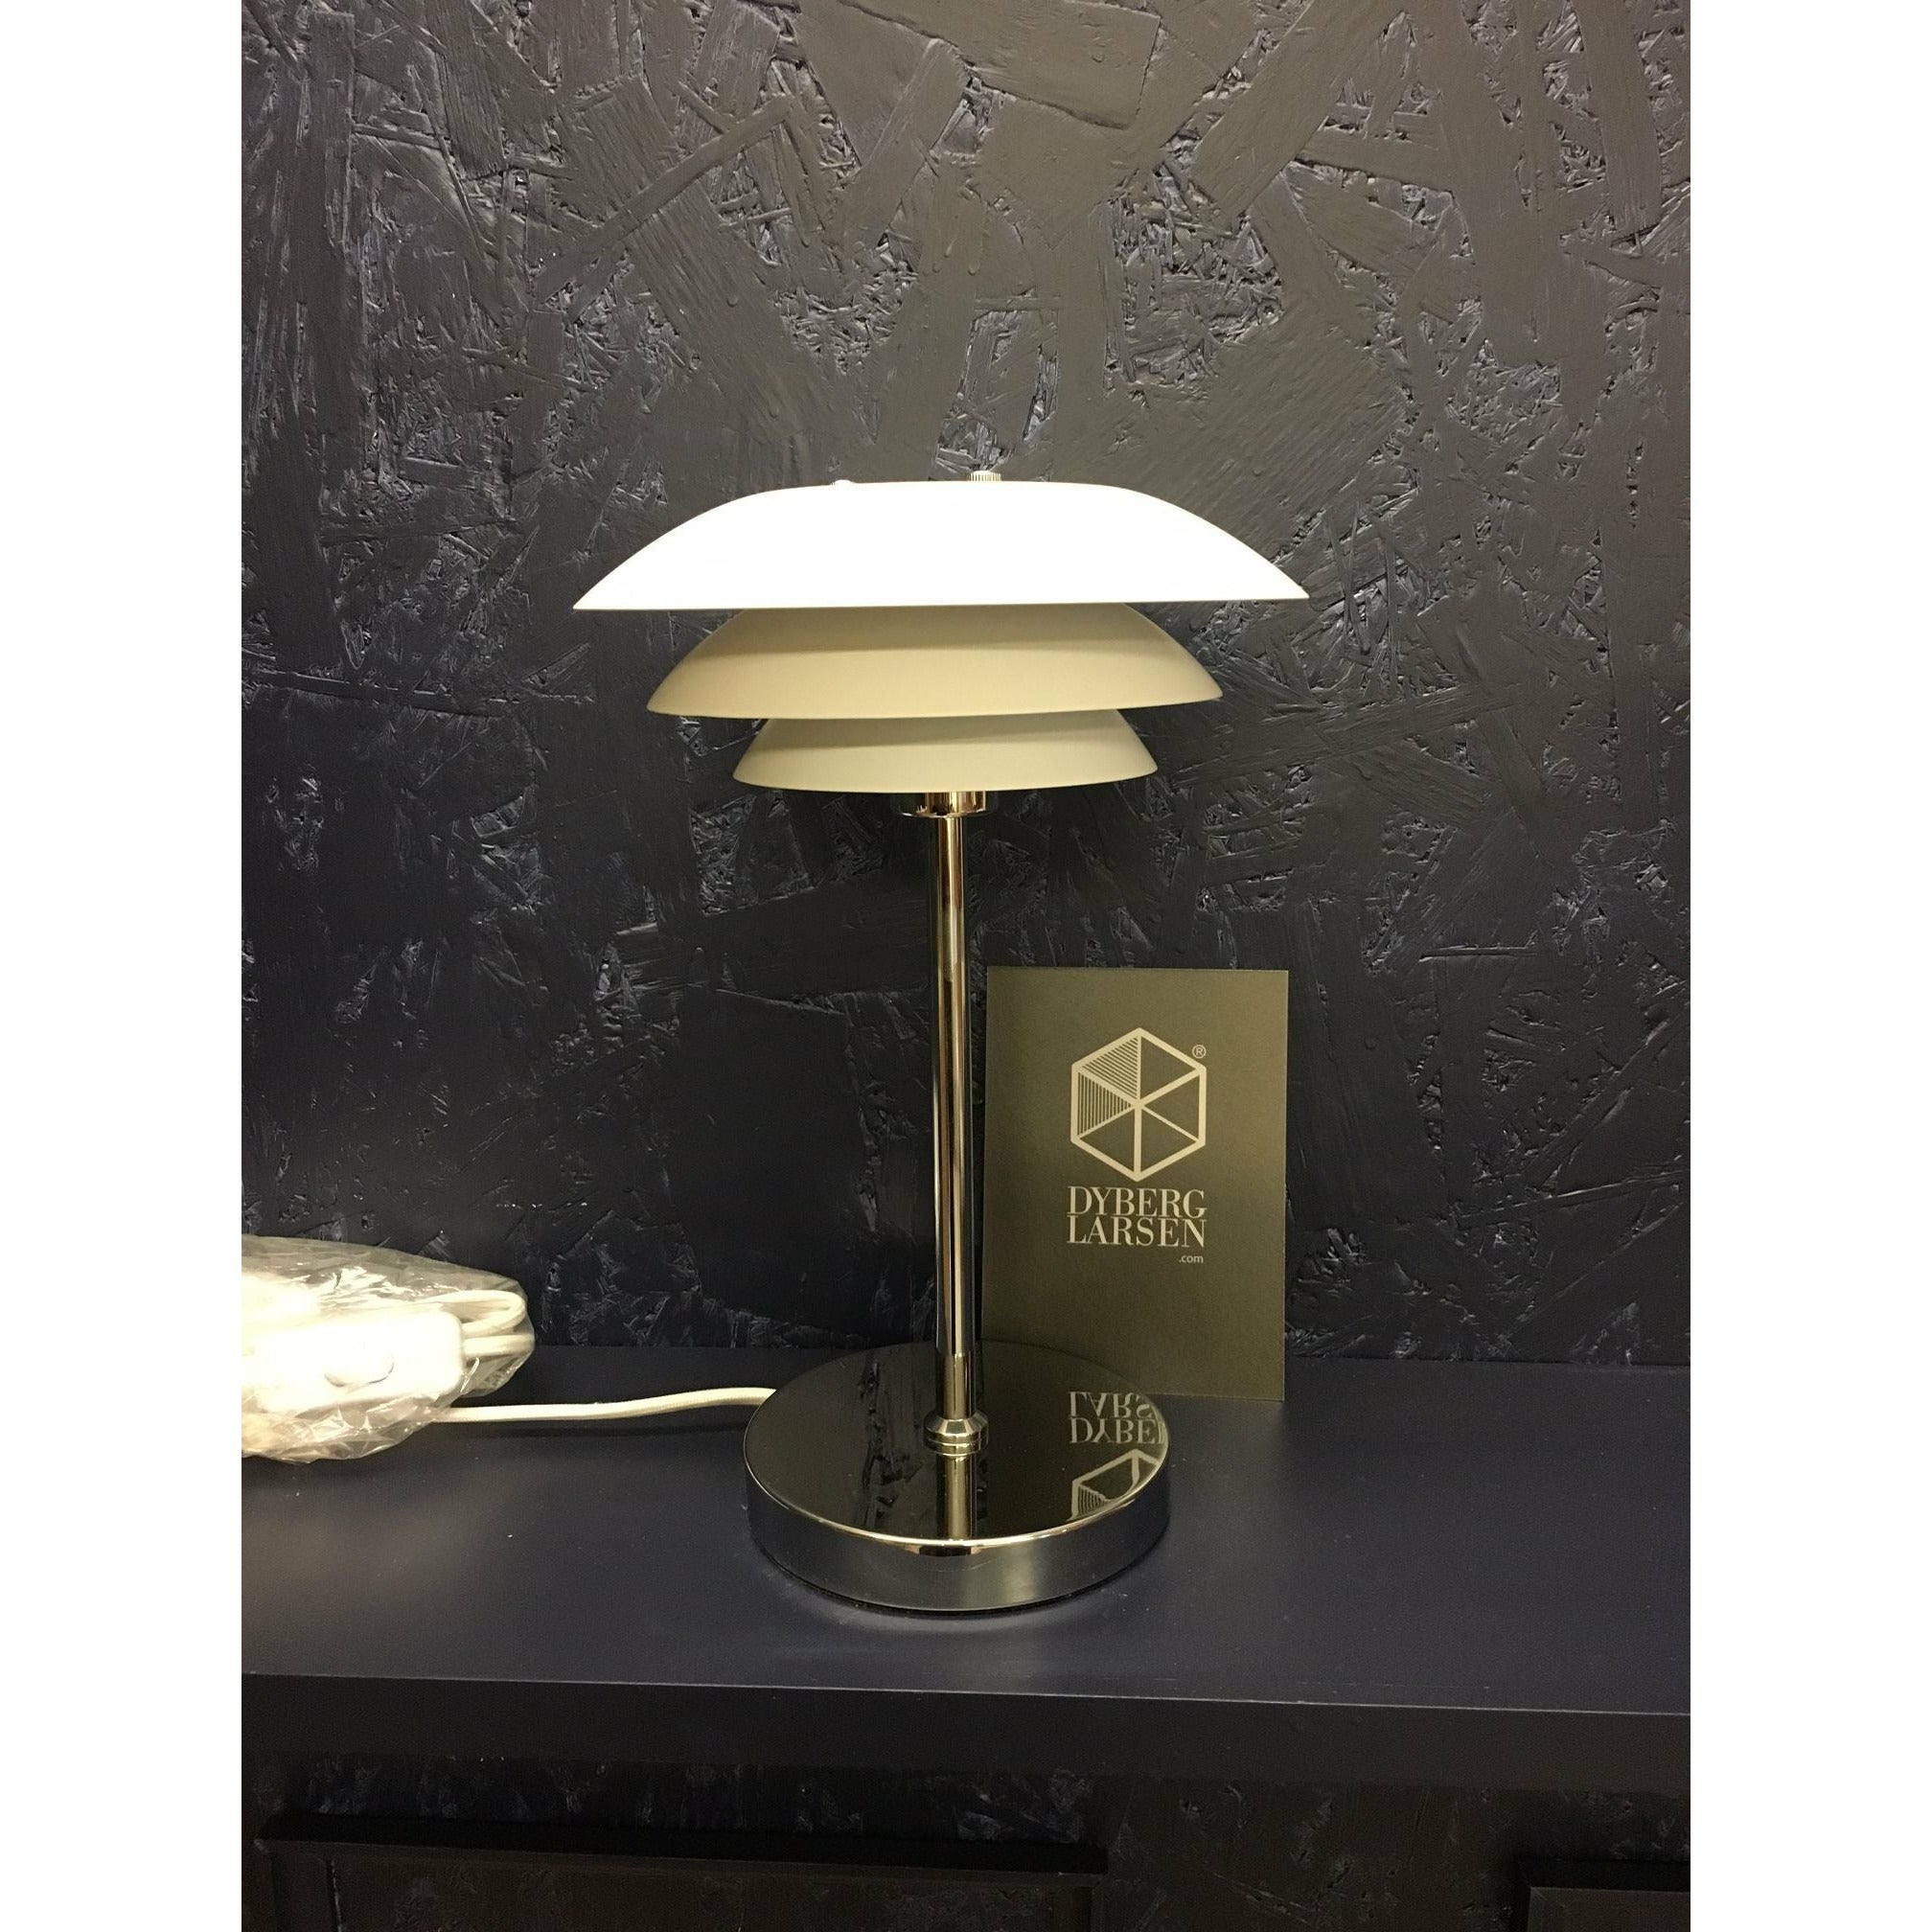 Dyberg Larsen DL 20 Lampka, szklanka opalowa